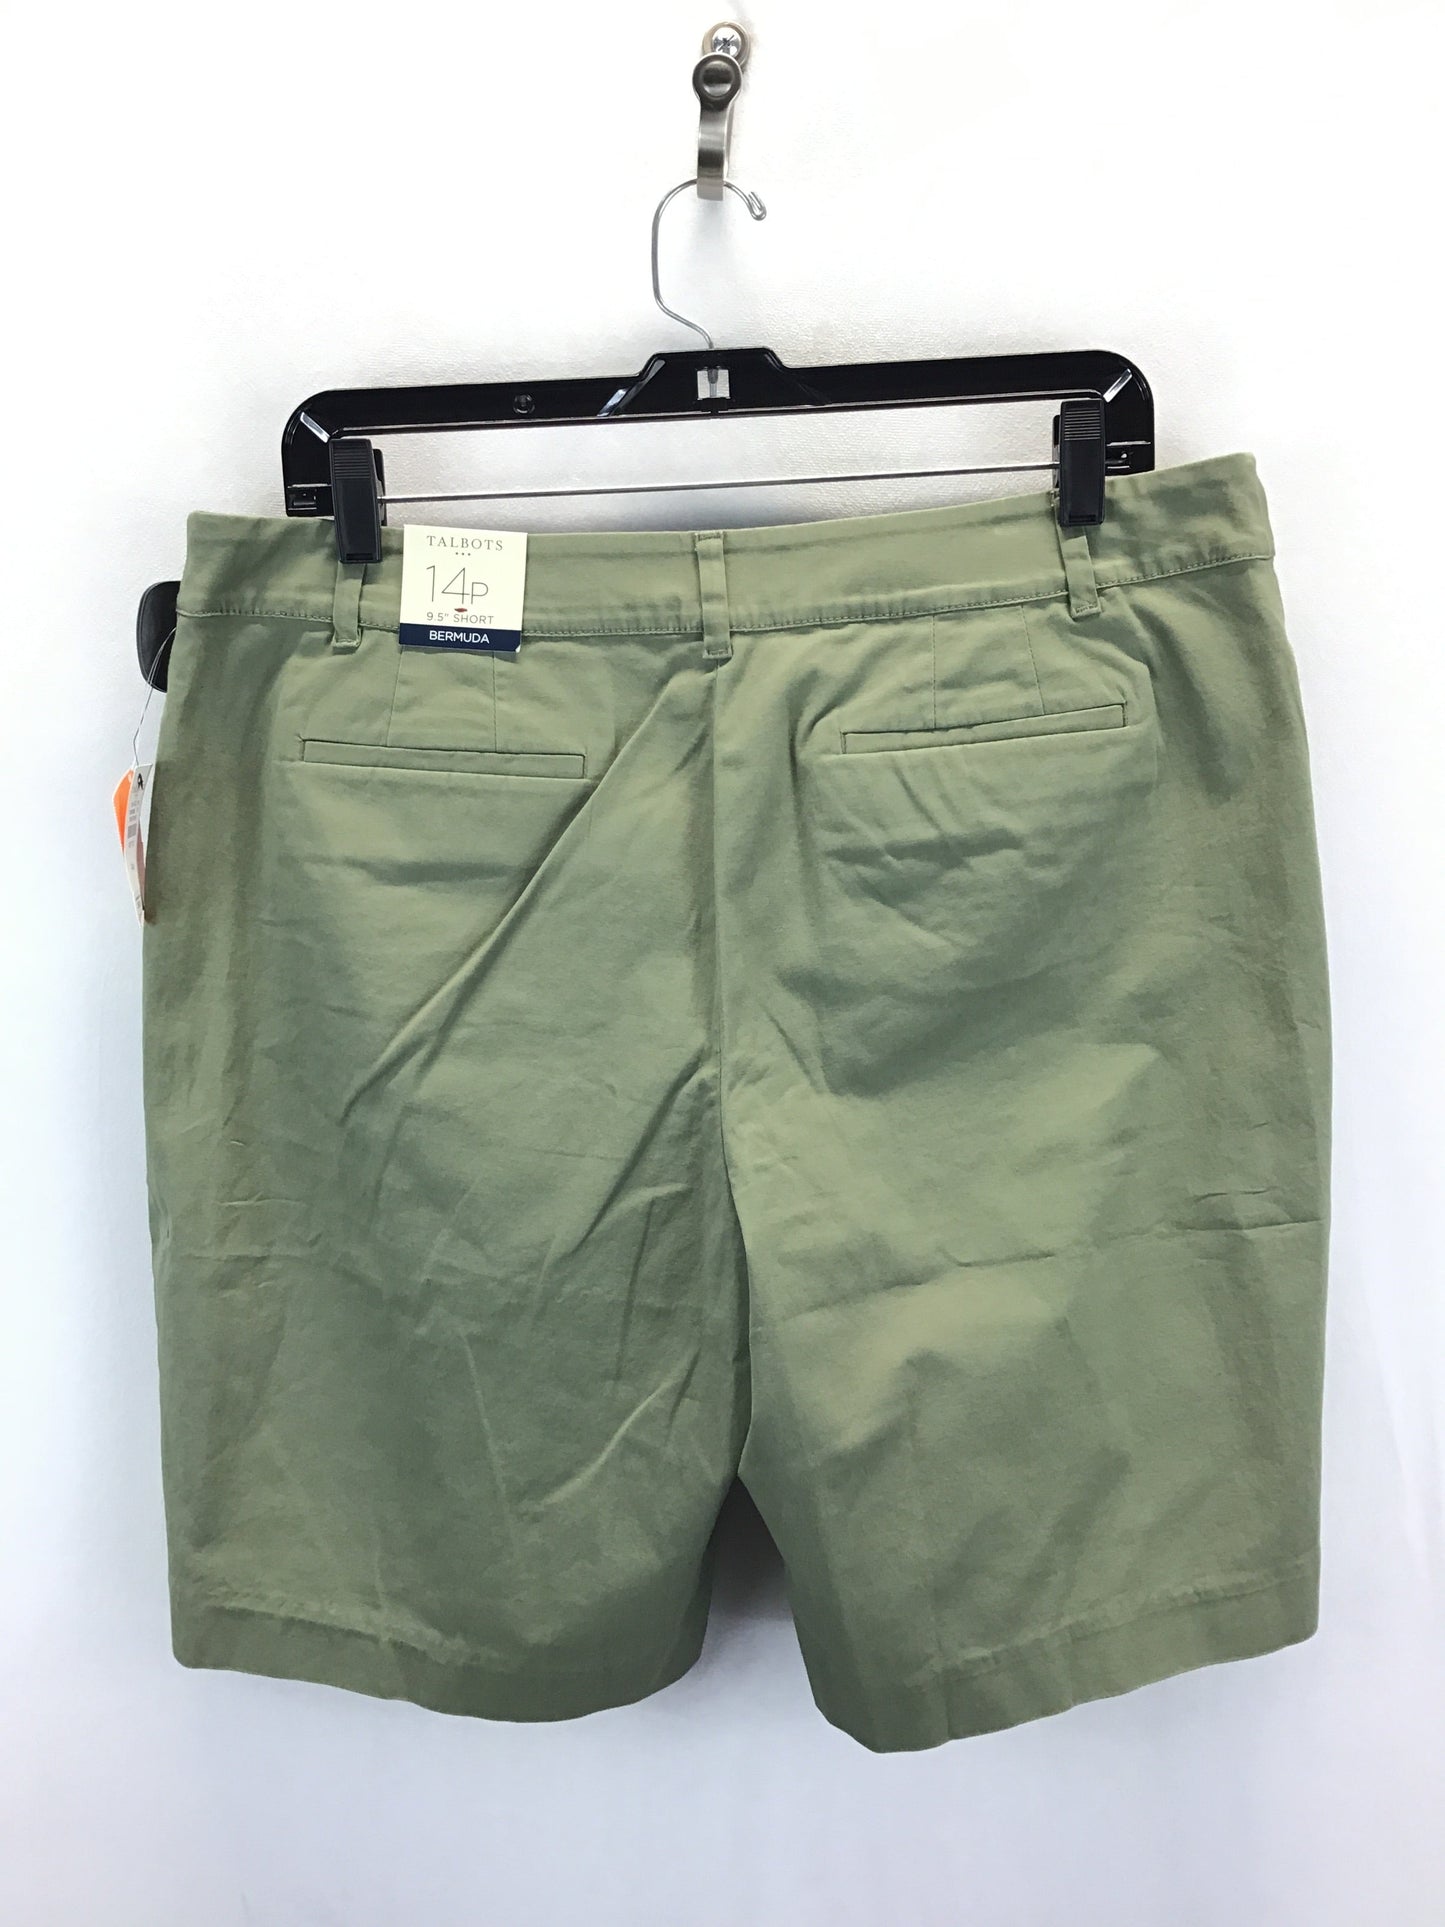 Green Shorts Talbots, Size 14